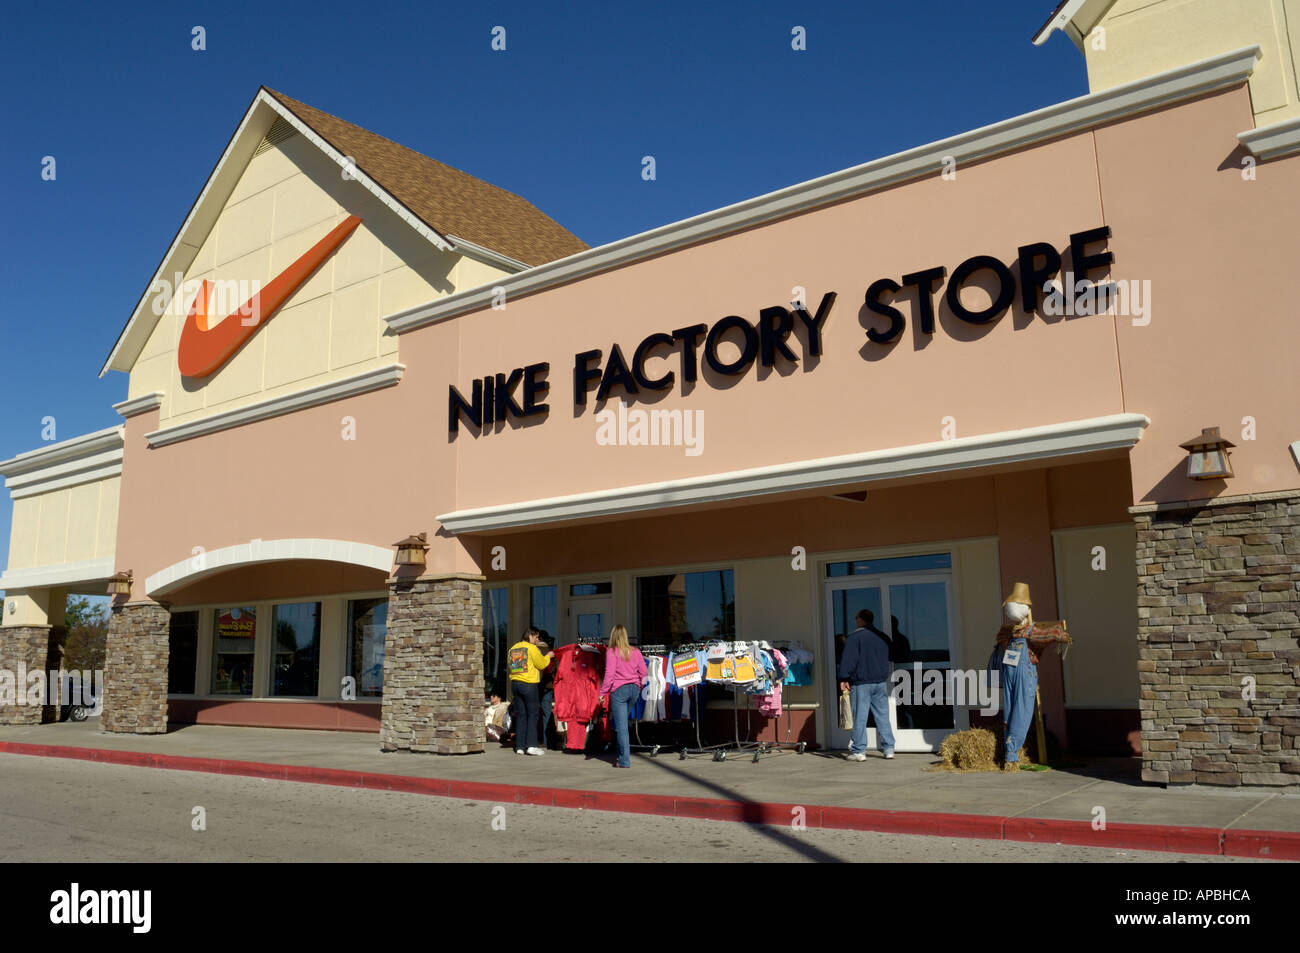 Nike Factory Outlet Fabrikverkauf in Birke laufen Michigan Stockfotografie  - Alamy